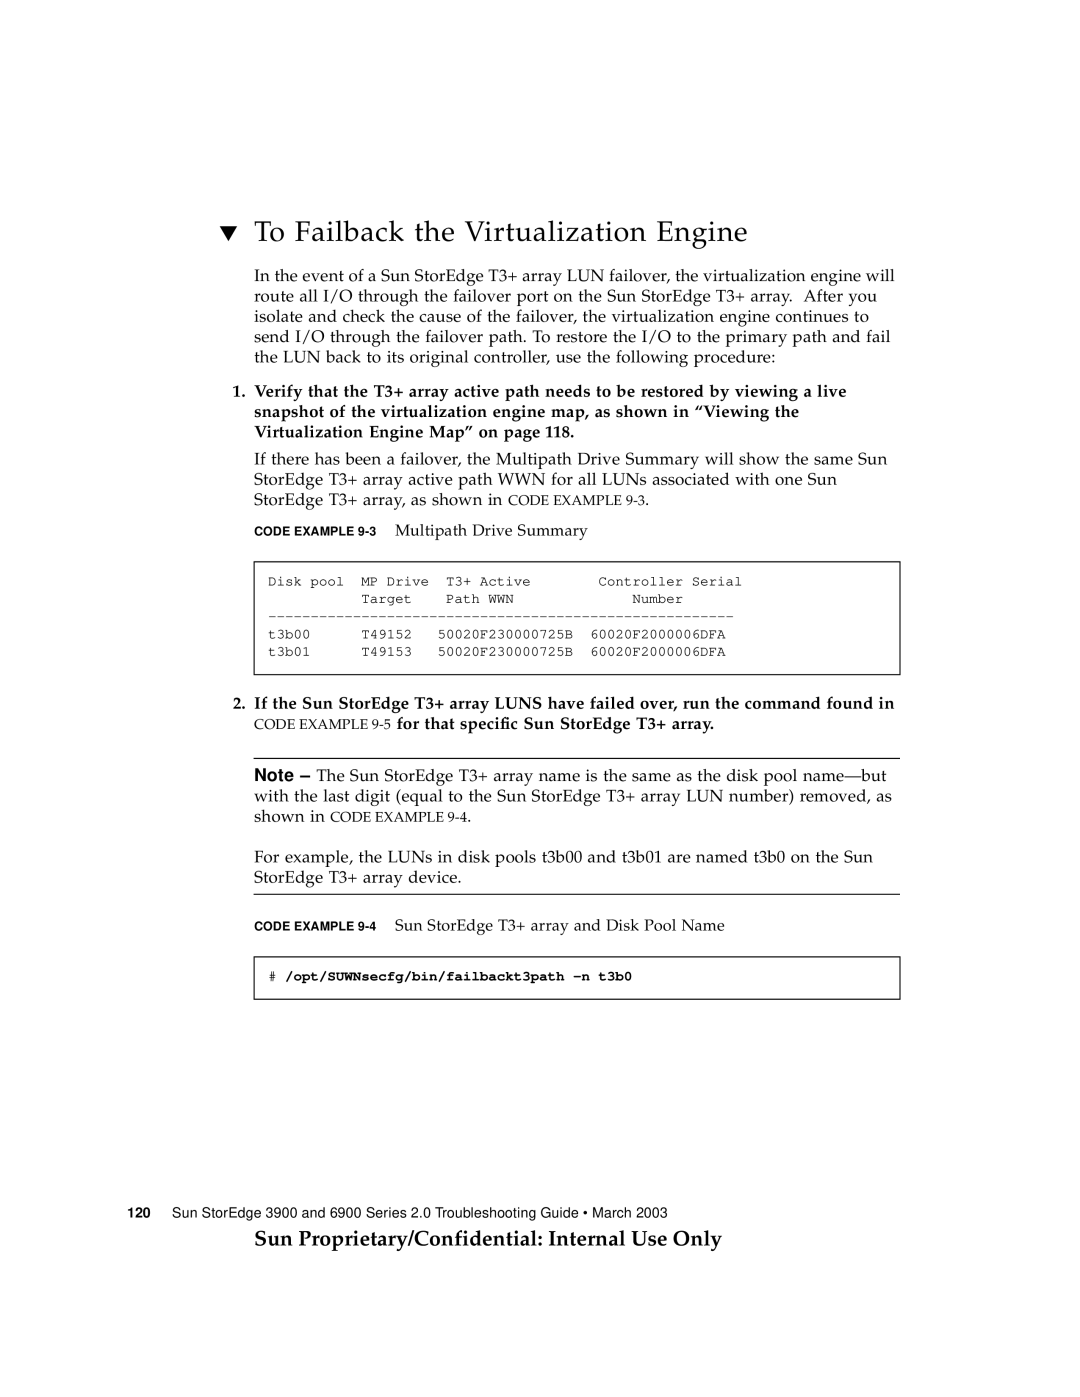 Sun Microsystems 3900, 6900 manual To Failback the Virtualization Engine, Sun Proprietary/Confidential Internal Use Only 